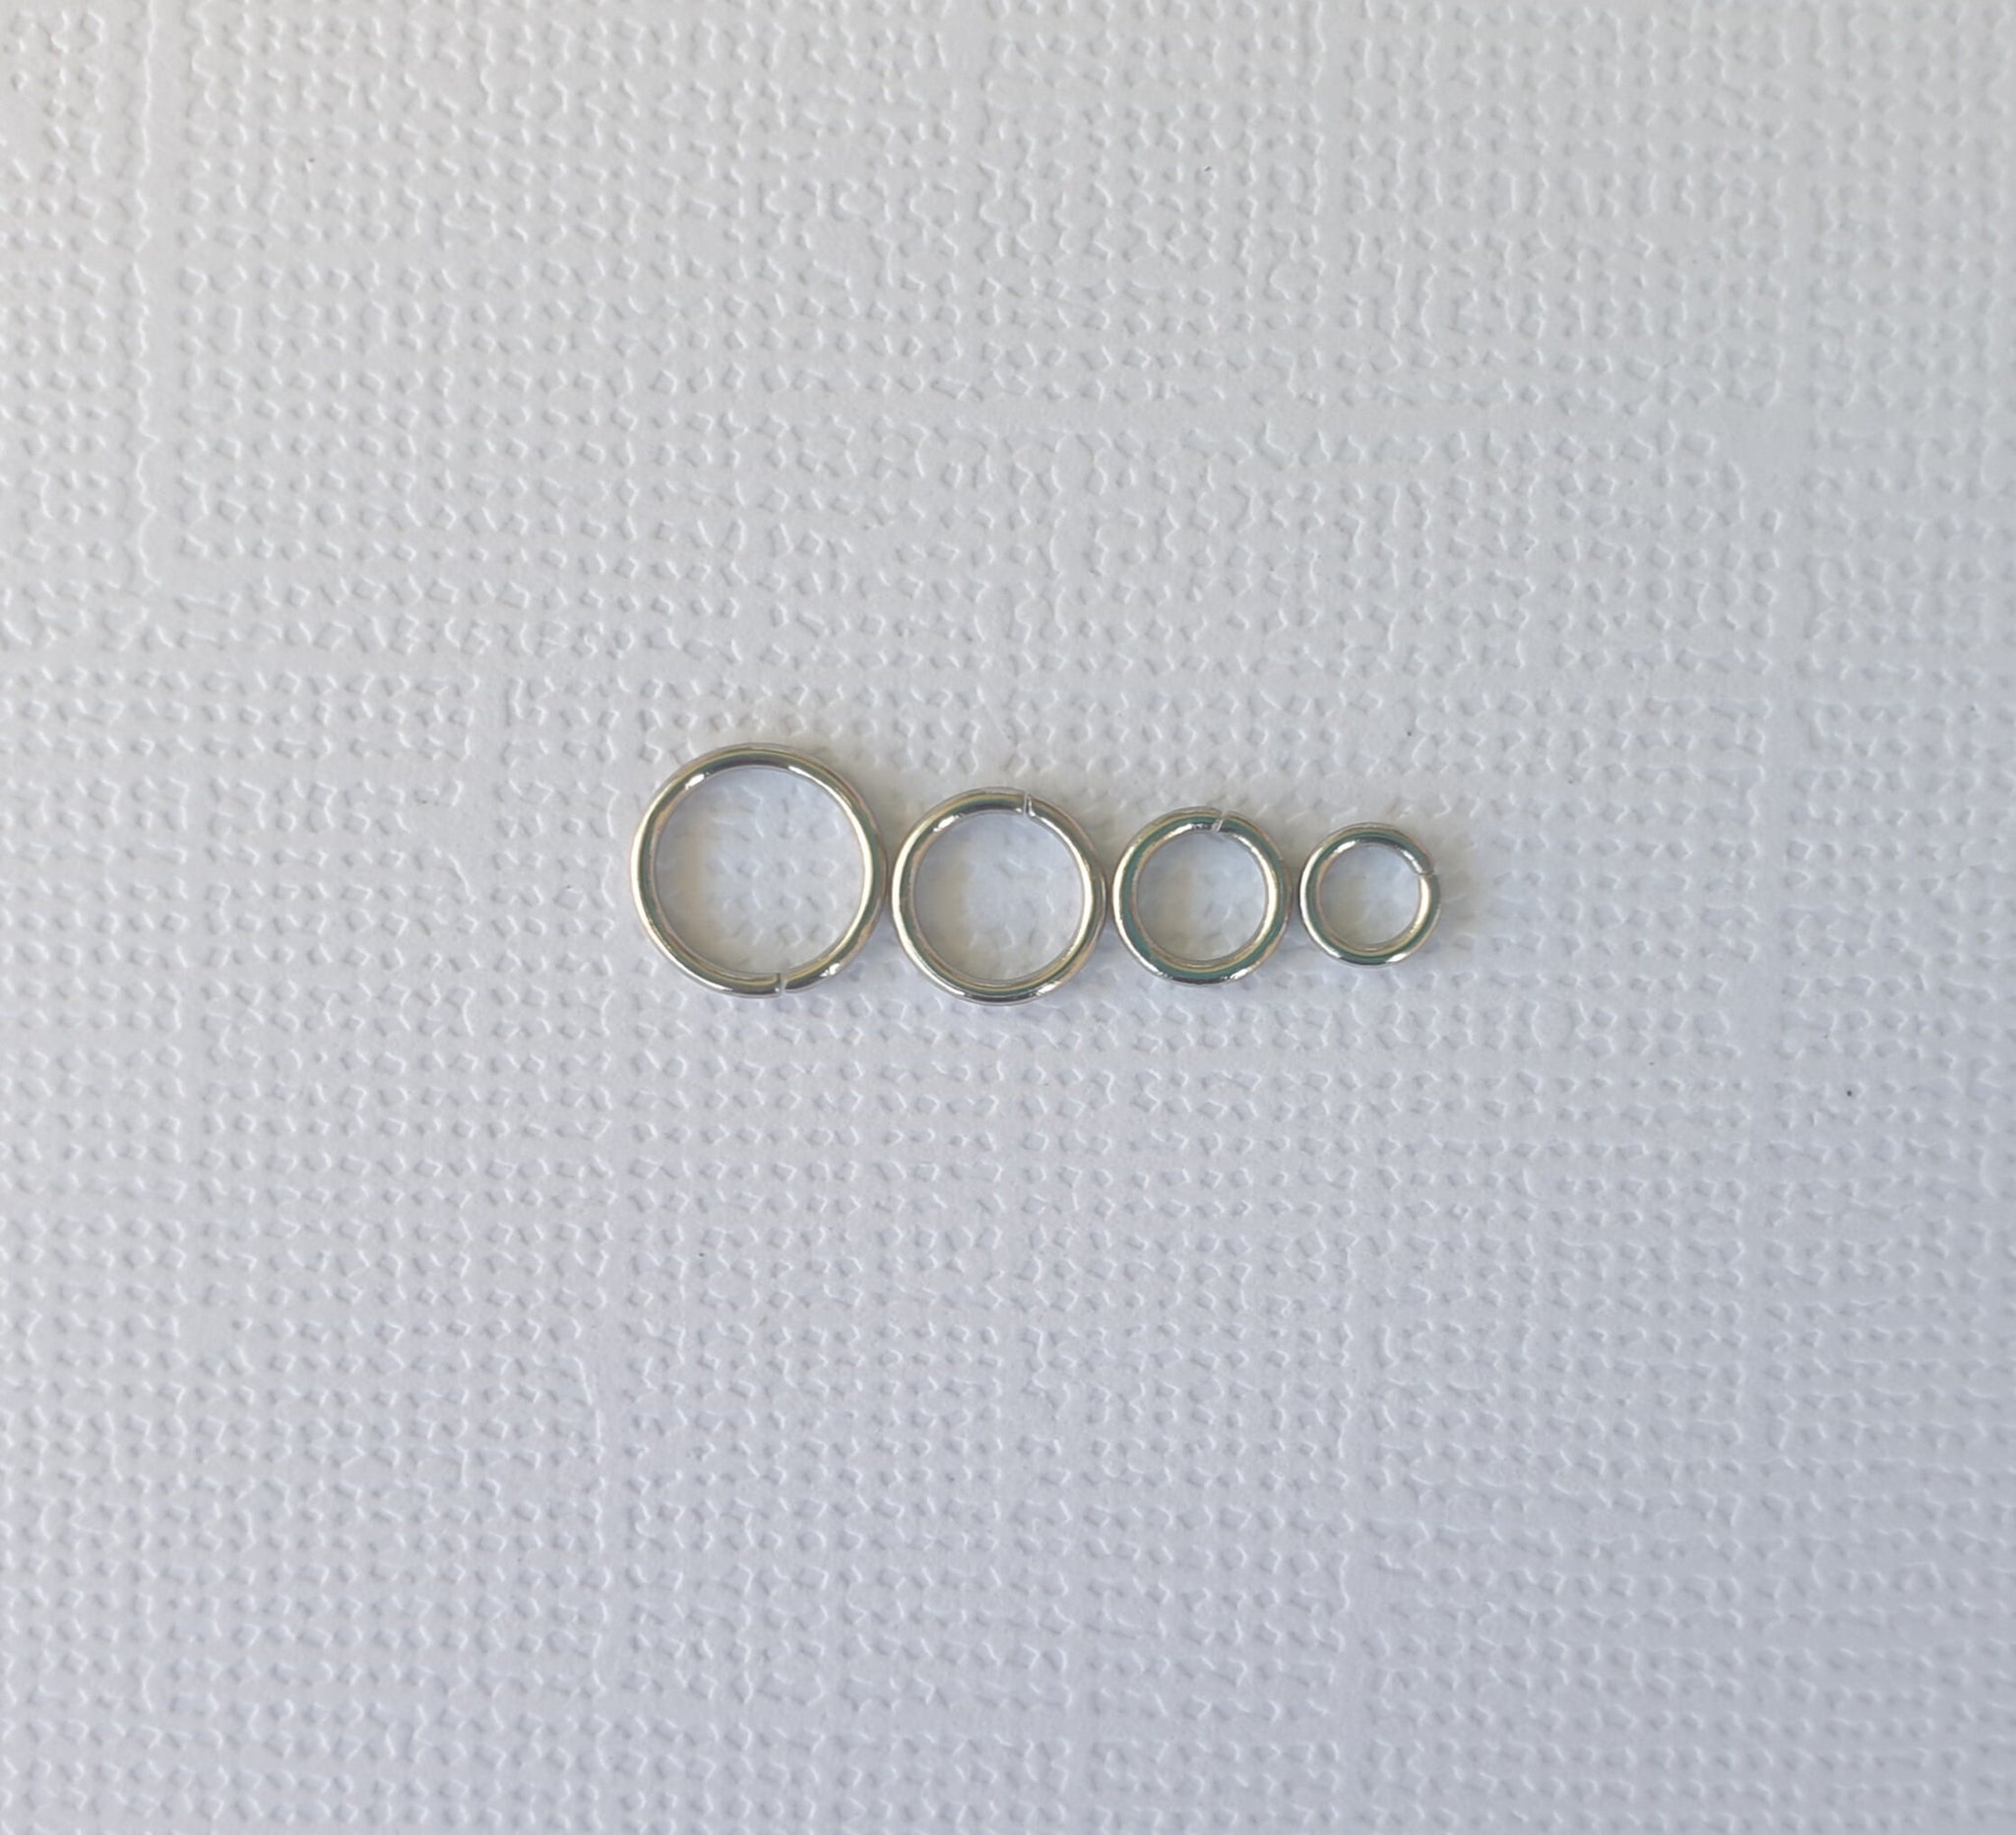 100pcs Stainless Steel Jump Rings, Jewellery Making Connectors, Split Rings, Accessories for Diy Jewellery, Jewellery Findings australia